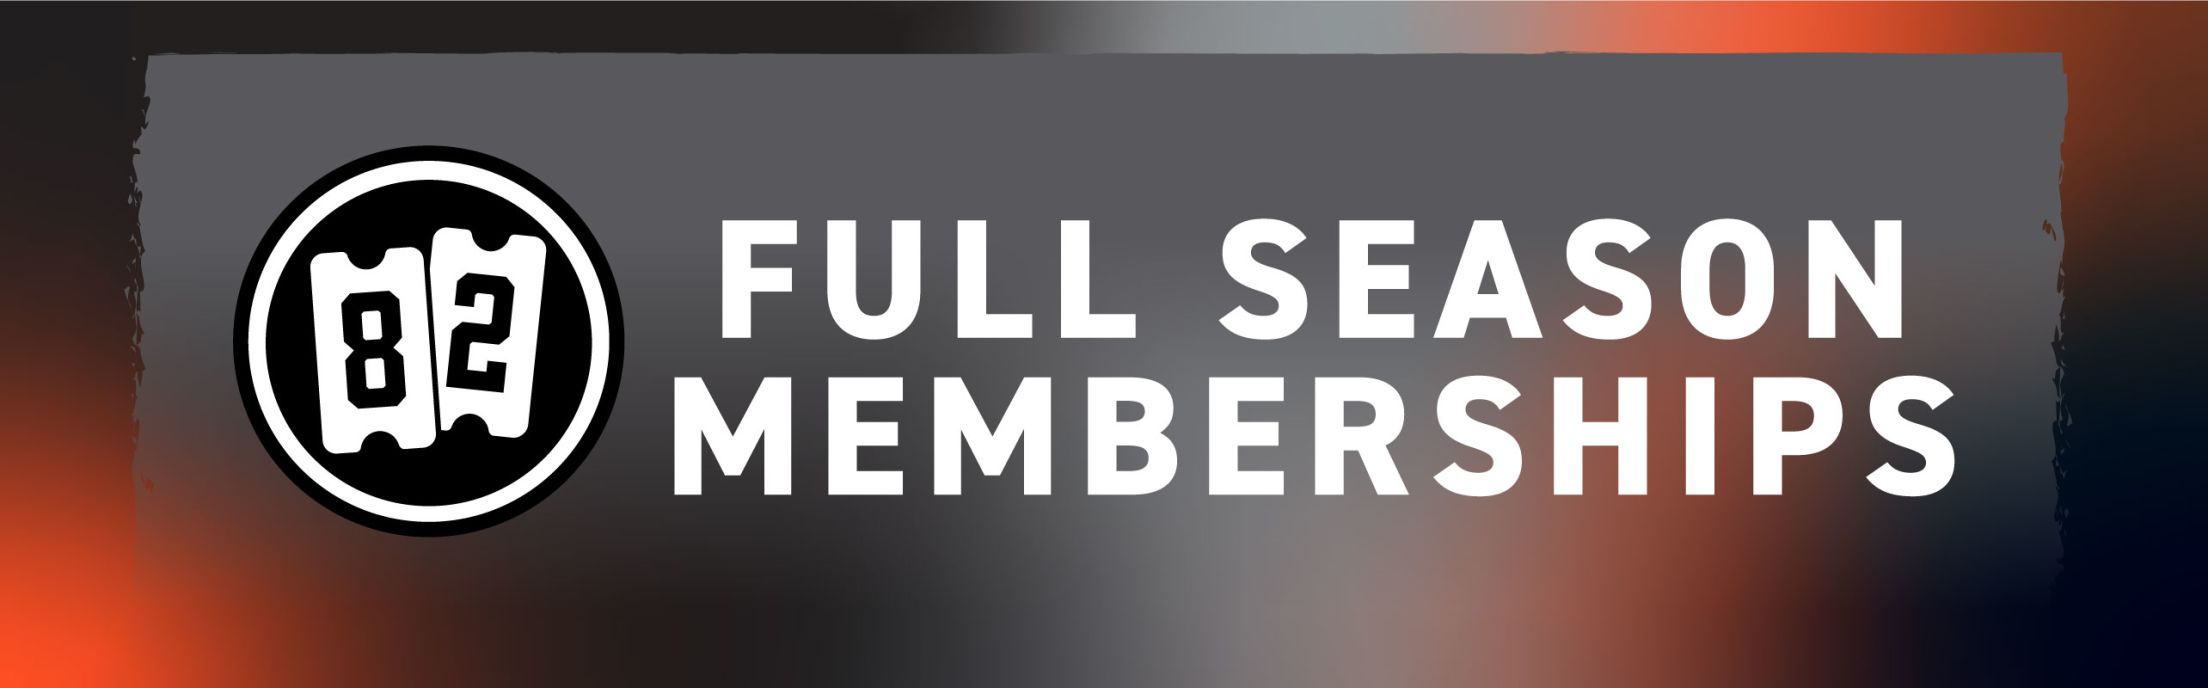 Season Memberships - Texas Legends